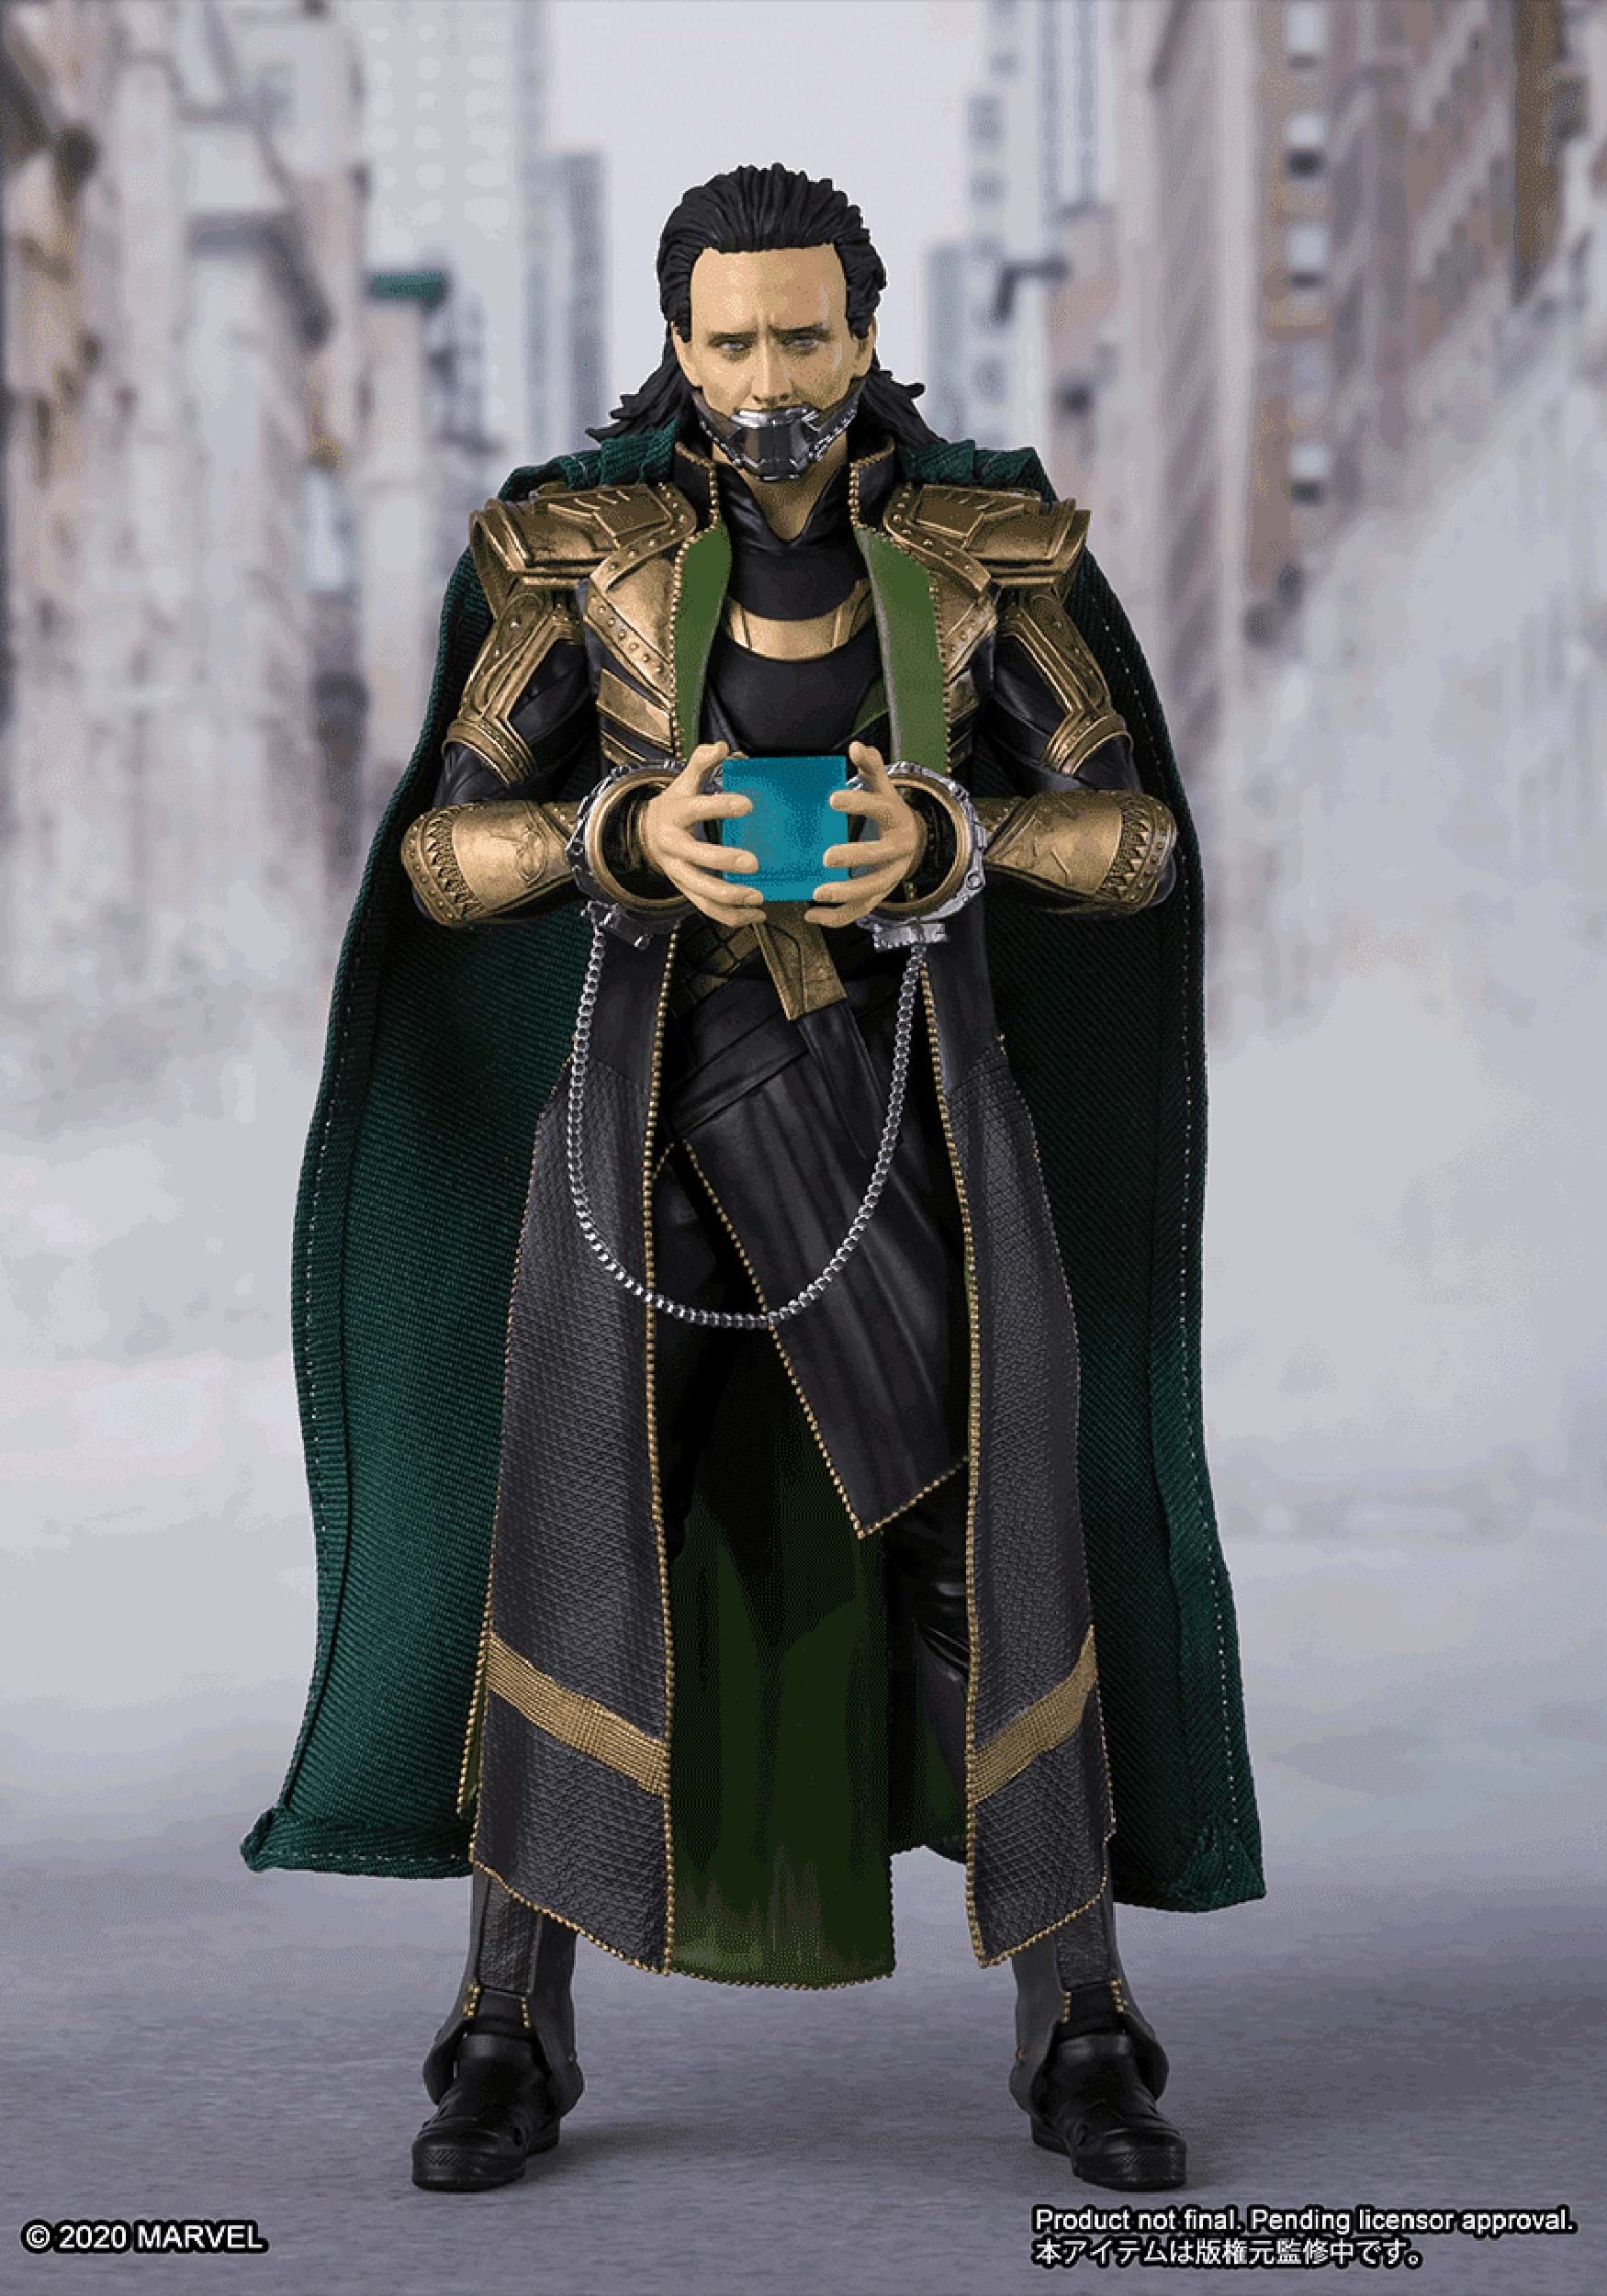 Figuarts Loki Action Figure Marvel Avengers S.H 